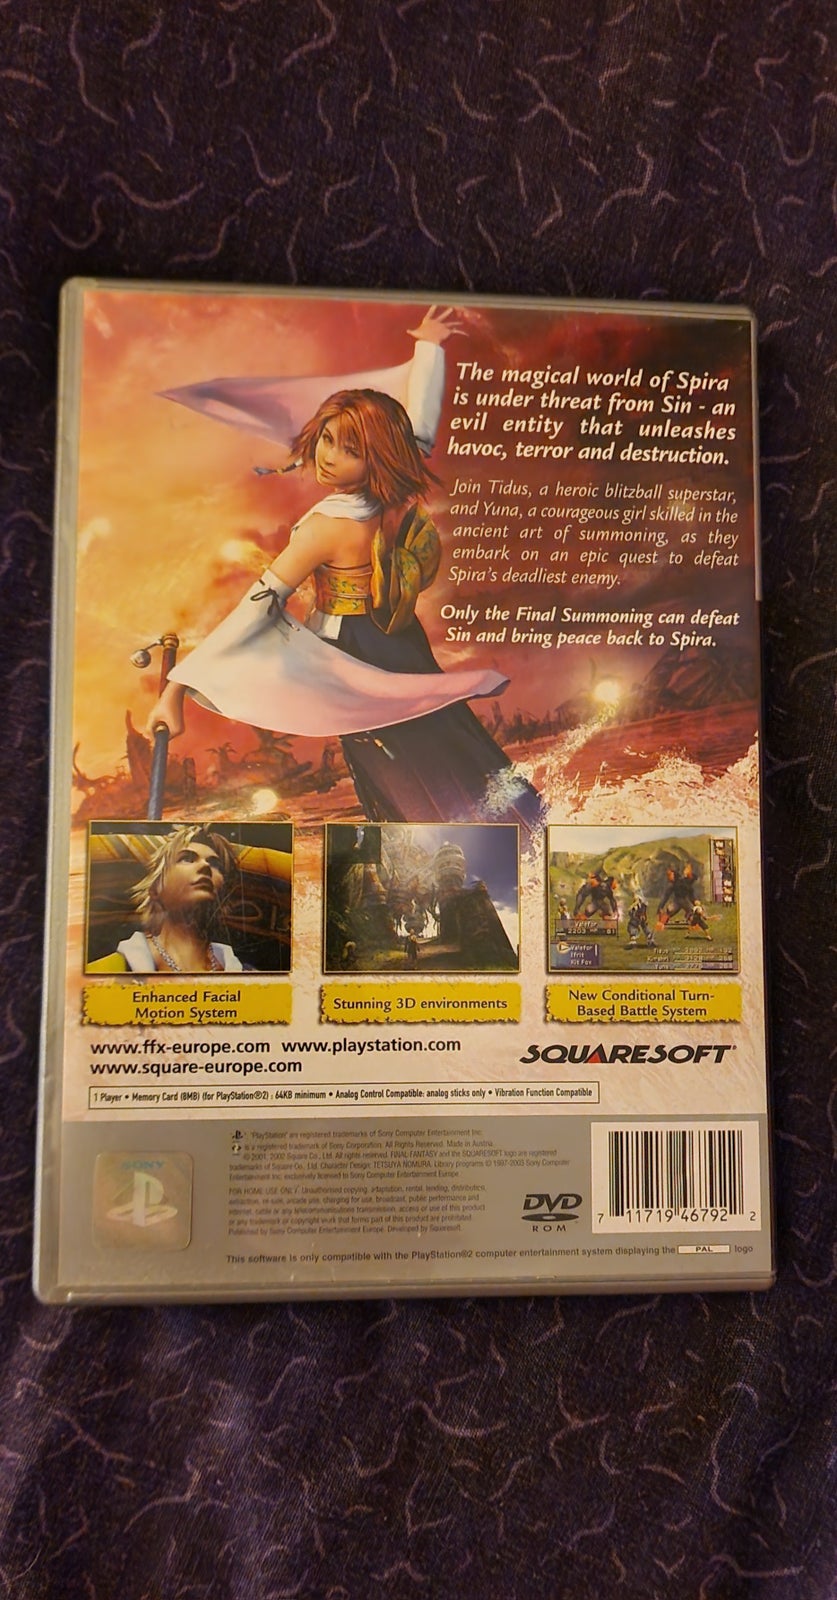 Final Fantasy X., PS2